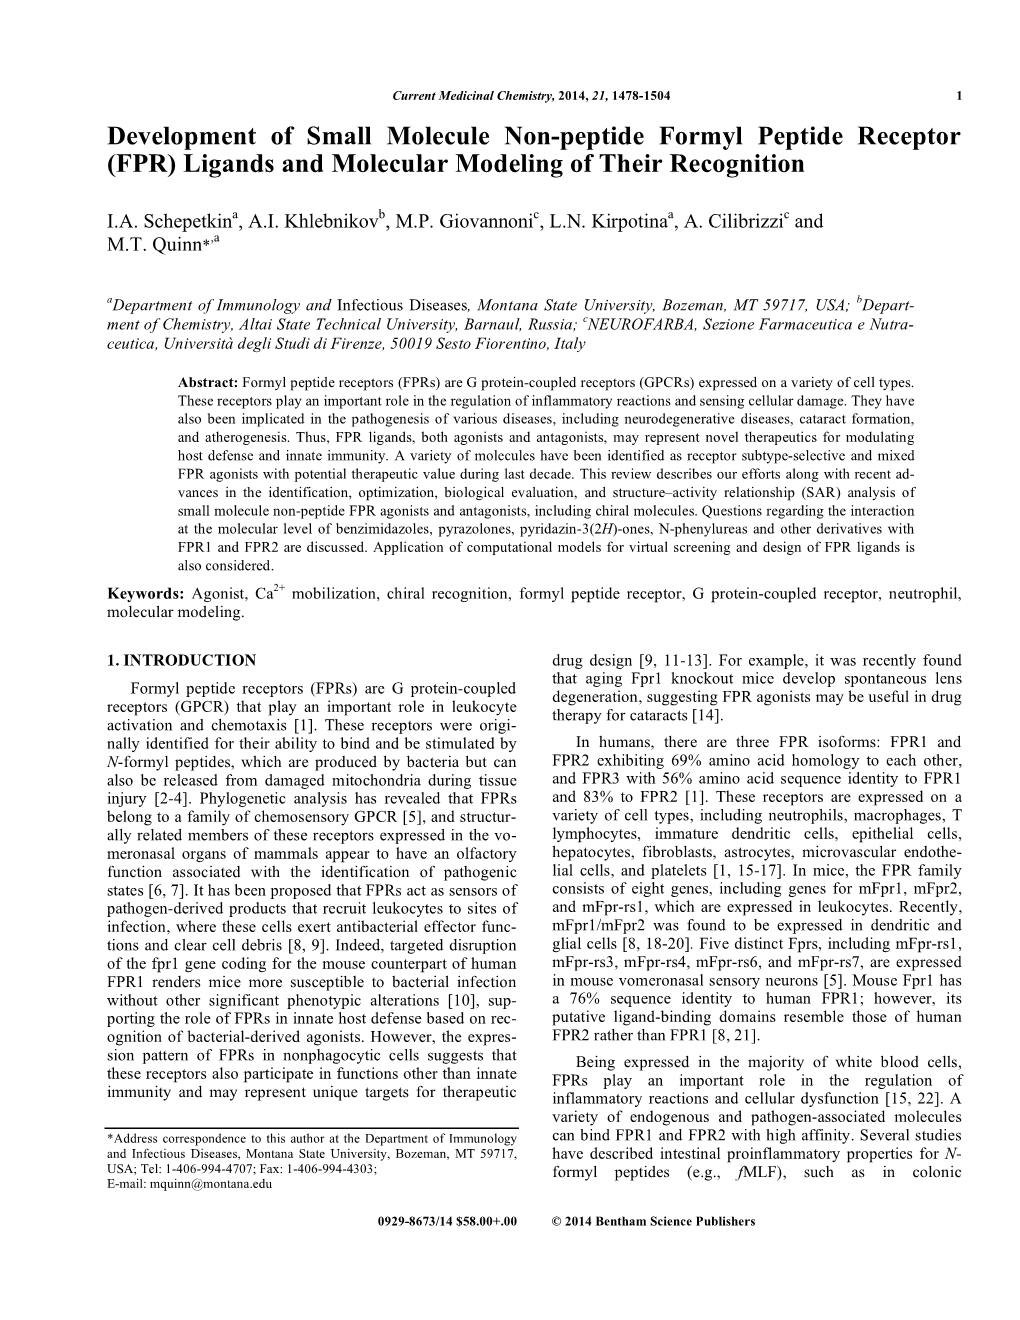 FPR) Ligands and Molecular Modeling of Their Recognition